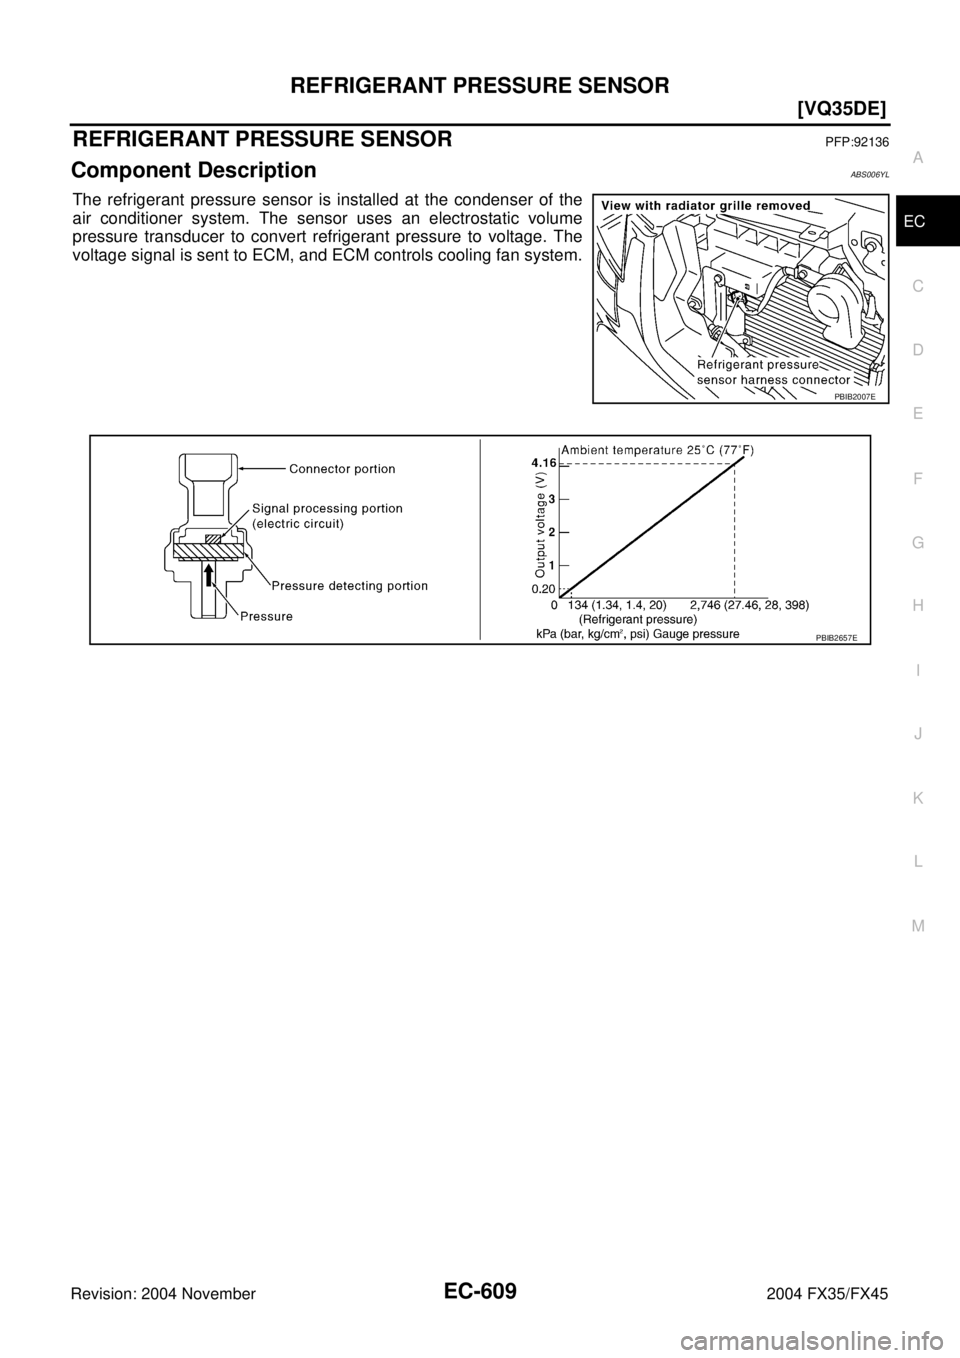 INFINITI FX35 2004  Service Manual REFRIGERANT PRESSURE SENSOR
EC-609
[VQ35DE]
C
D
E
F
G
H
I
J
K
L
MA
EC
Revision: 2004 November 2004 FX35/FX45
REFRIGERANT PRESSURE SENSORPFP:92136
Component DescriptionABS006YL
The refrigerant pressure